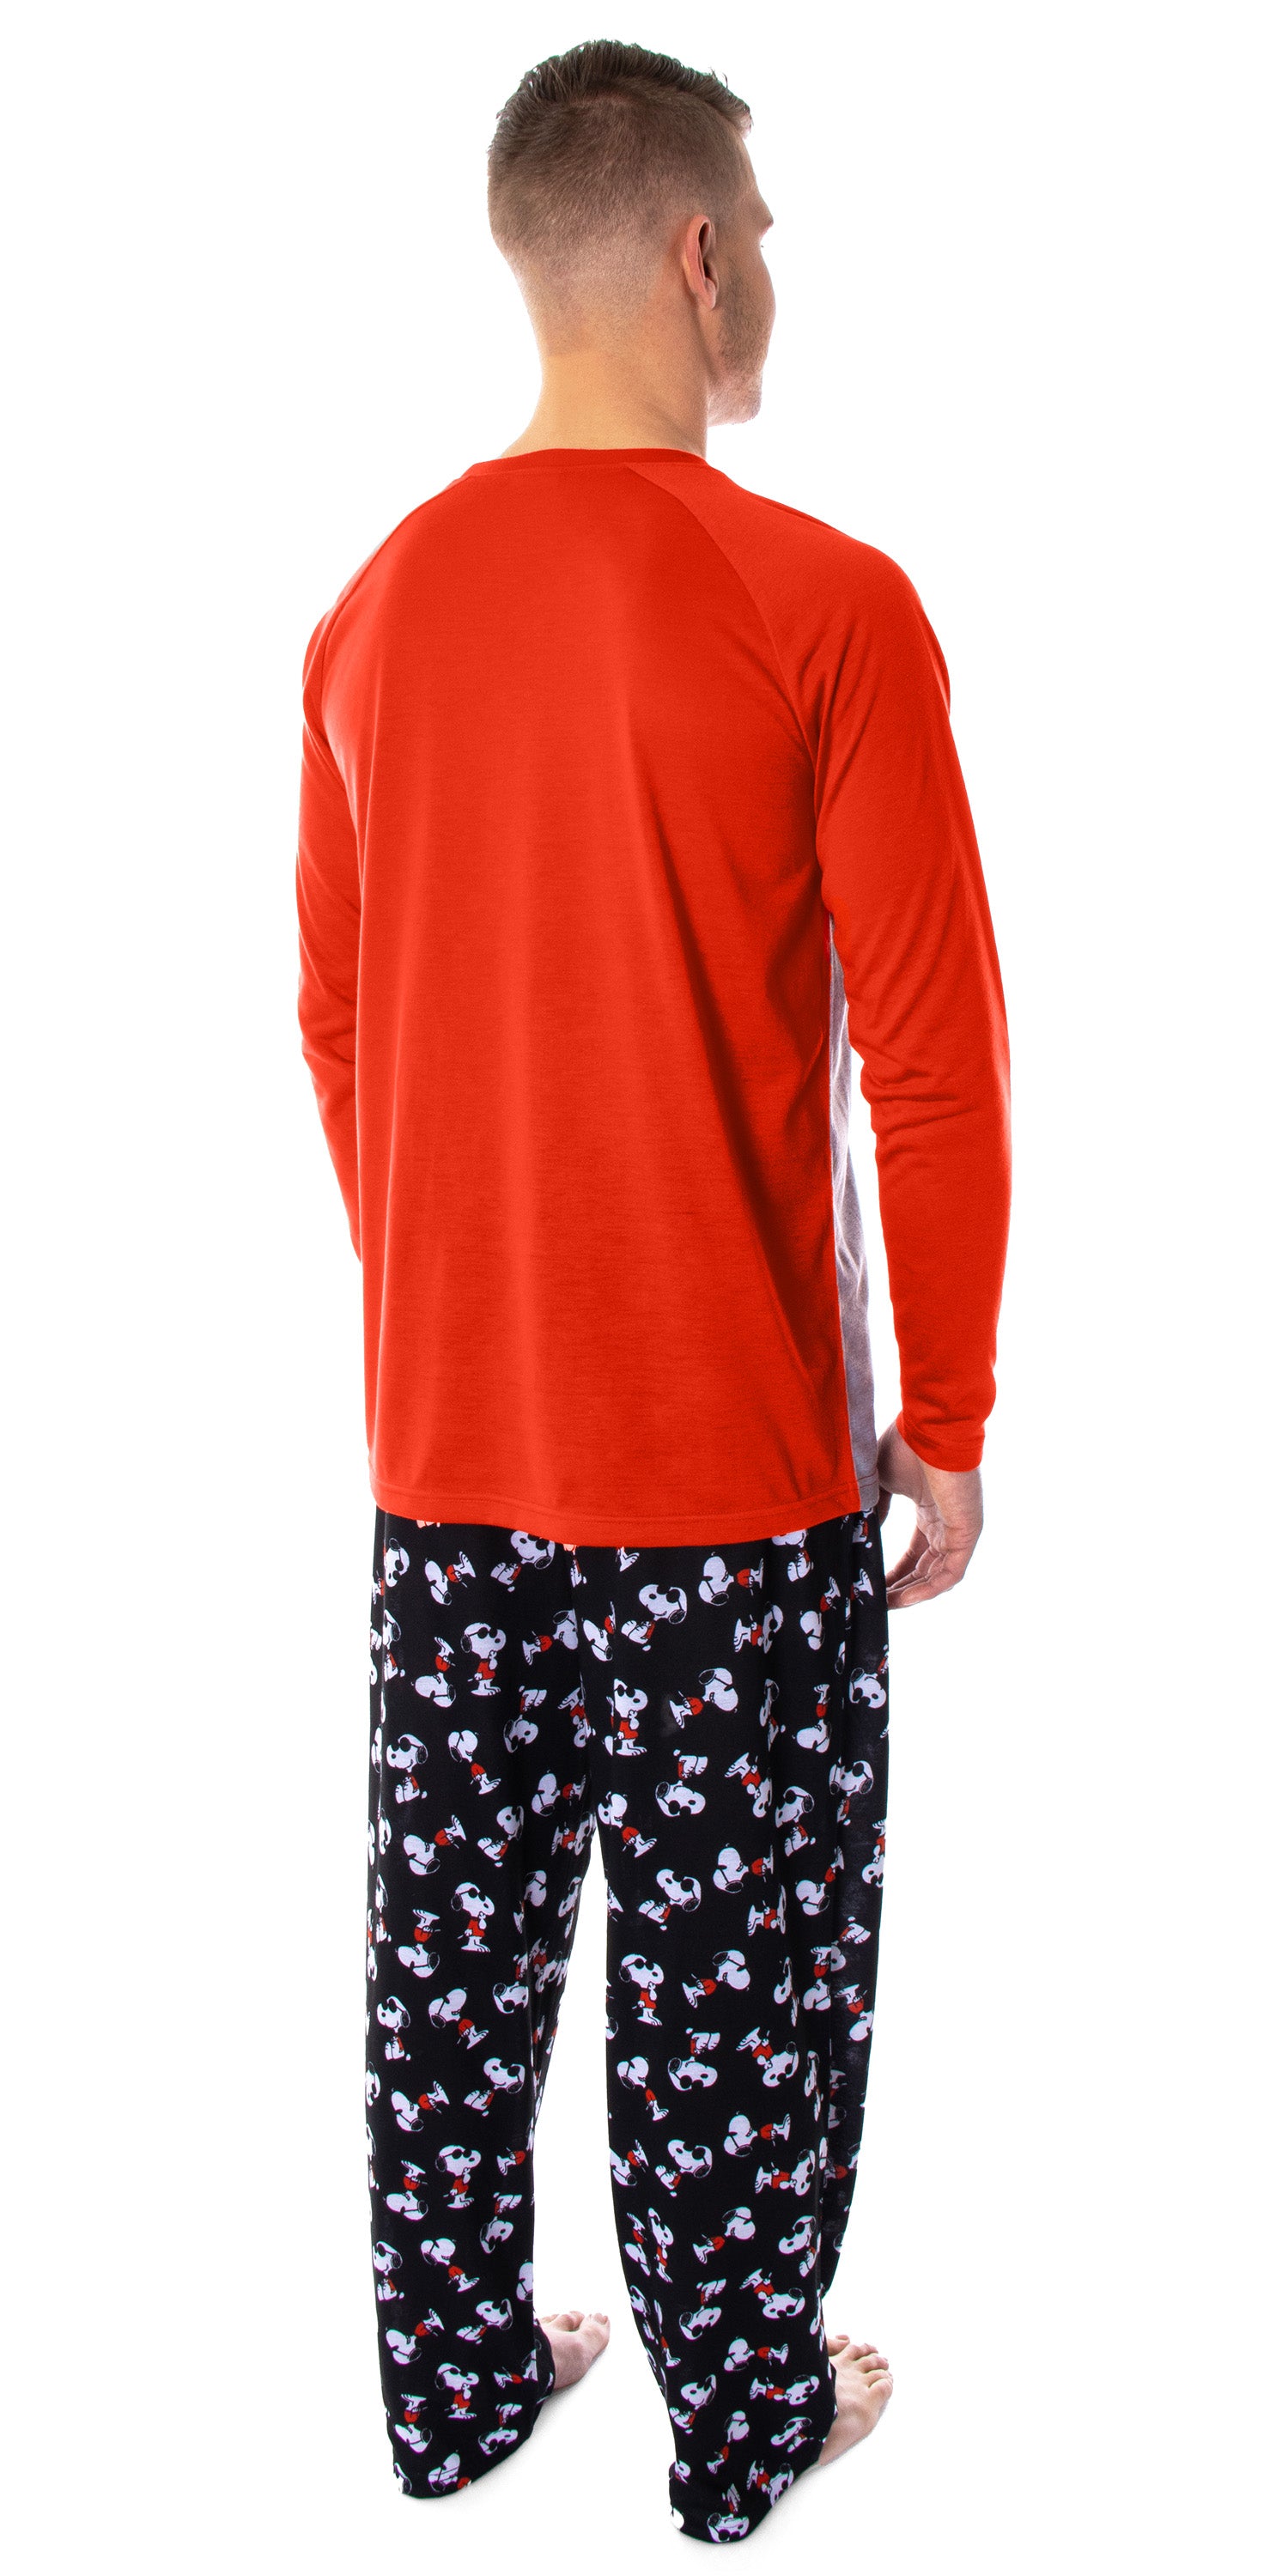 Cozy and Comfy Peanuts Adult Long John Pajama Top